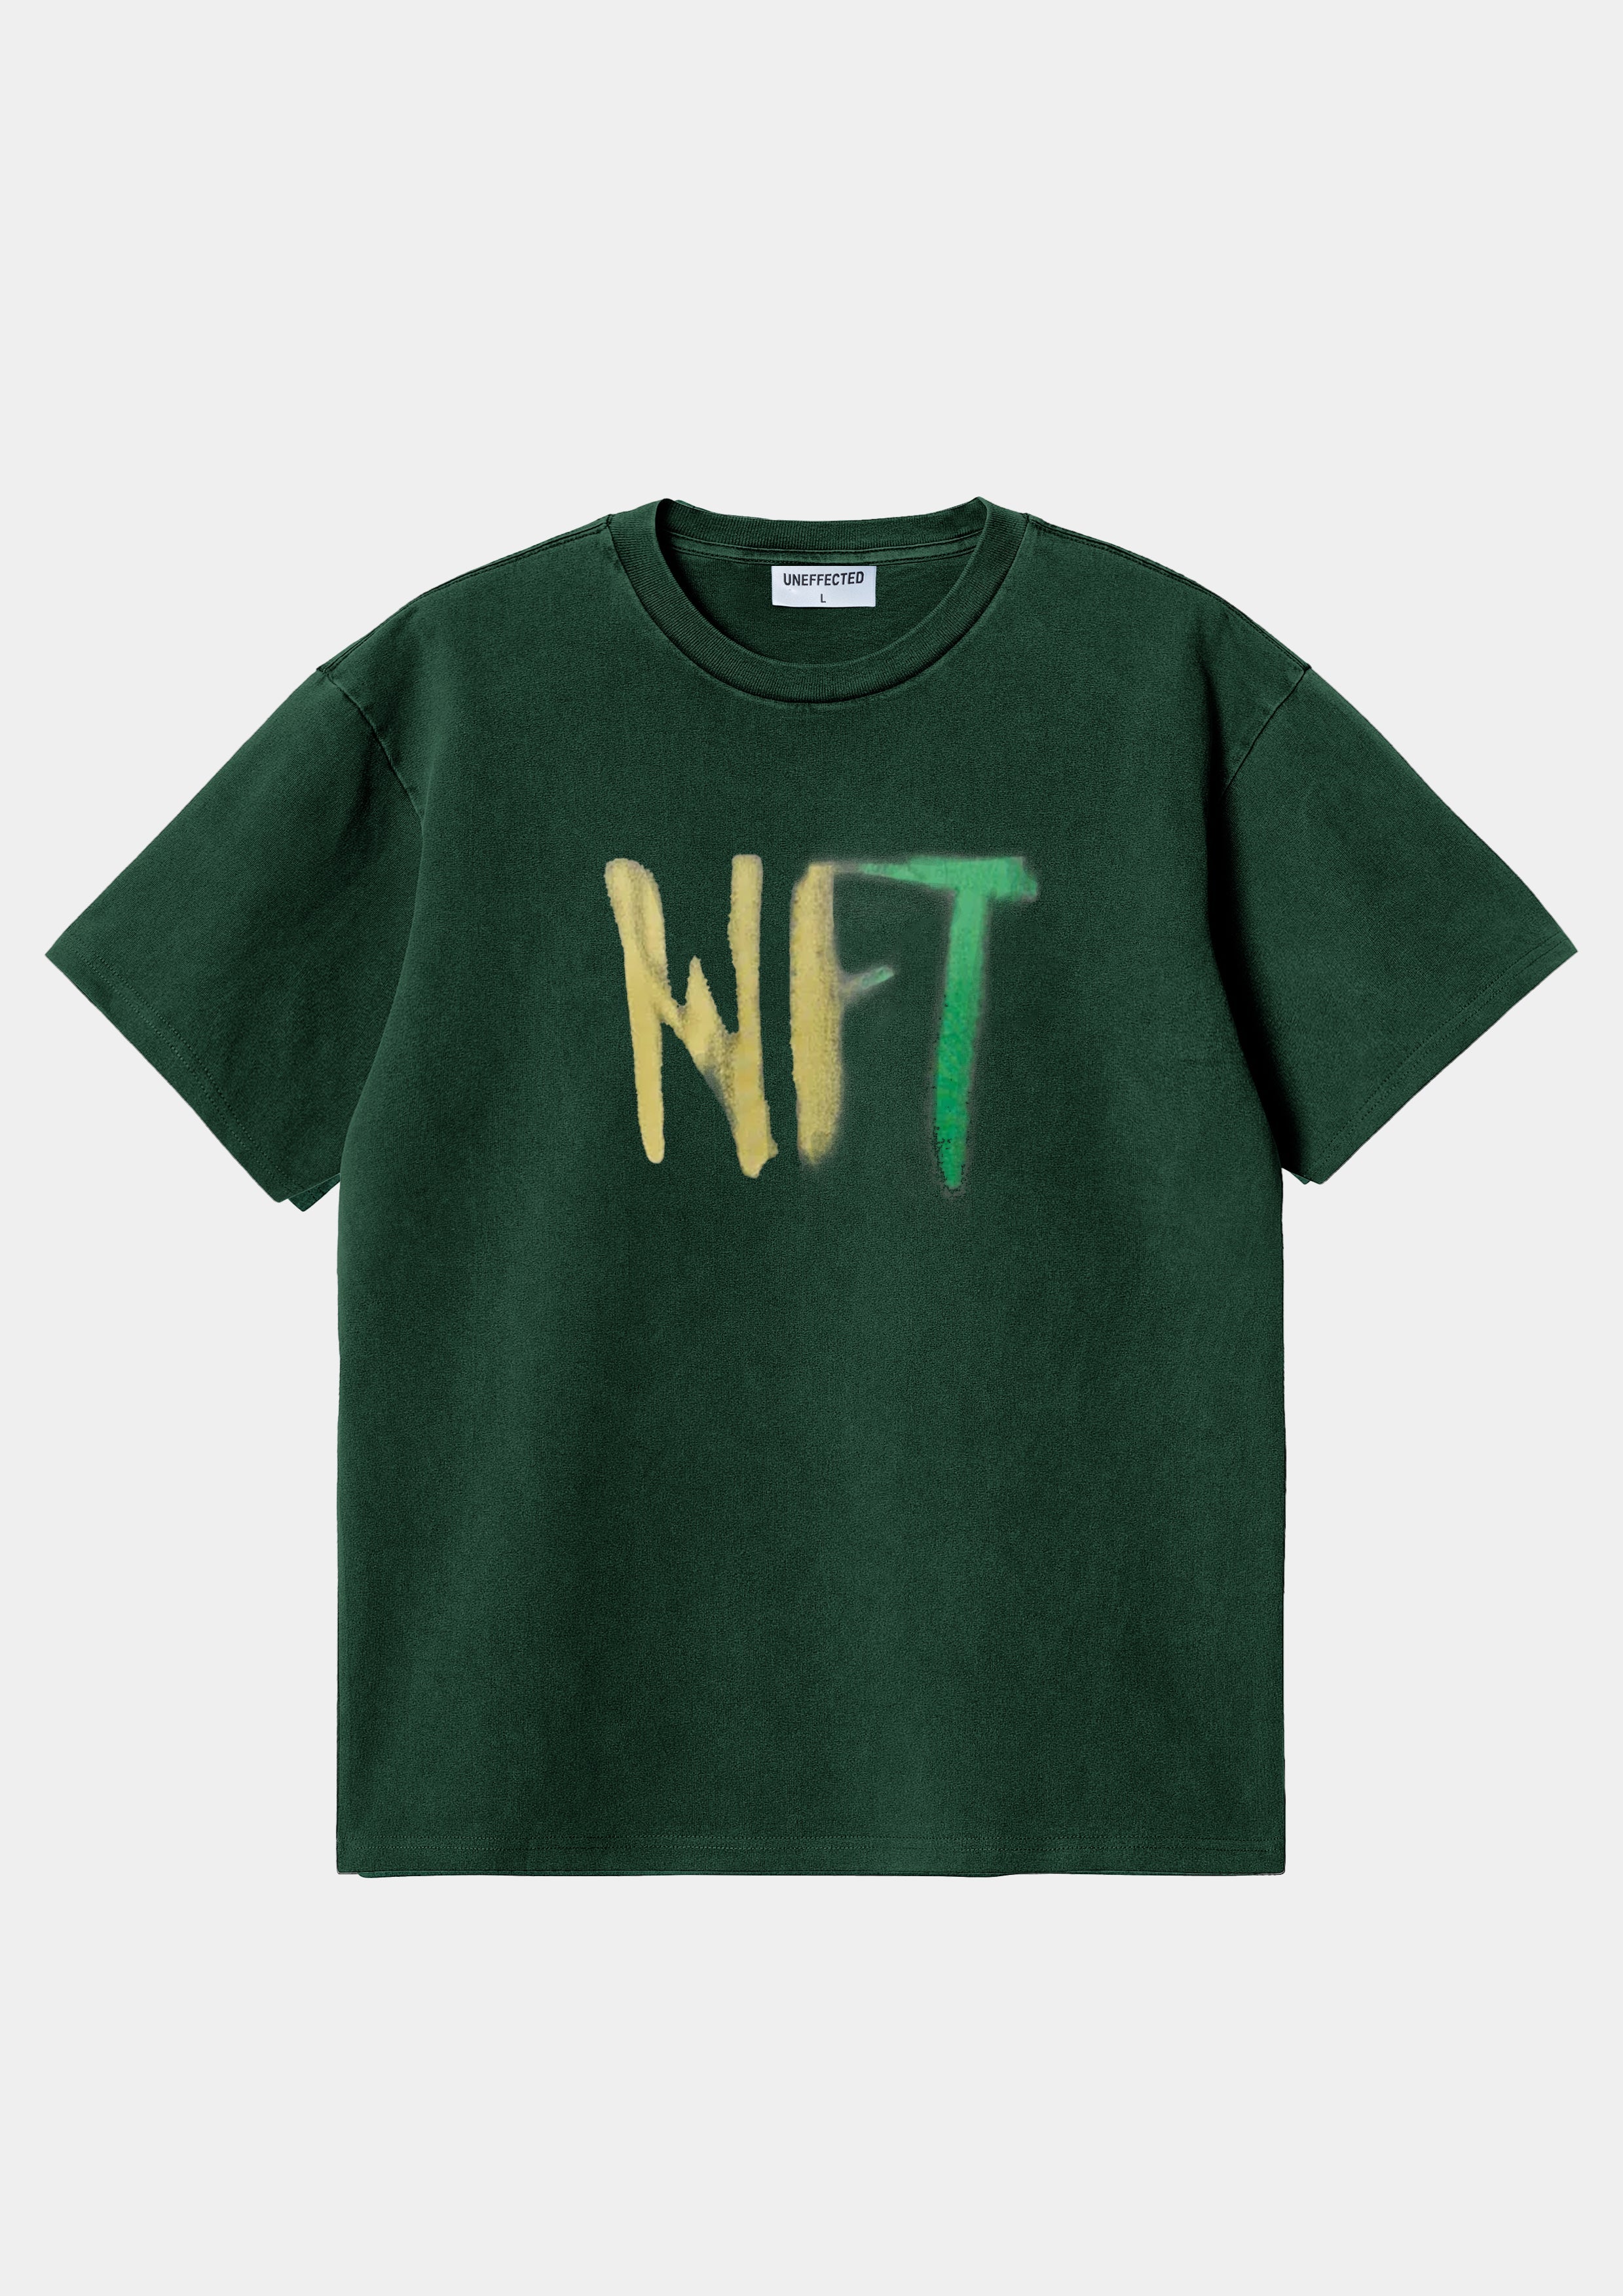 NFT Heavy Oversized Washed Tee - Green - UNEFFECTED STUDIOS® - T - shirt - UNEFFECTED STUDIOS®